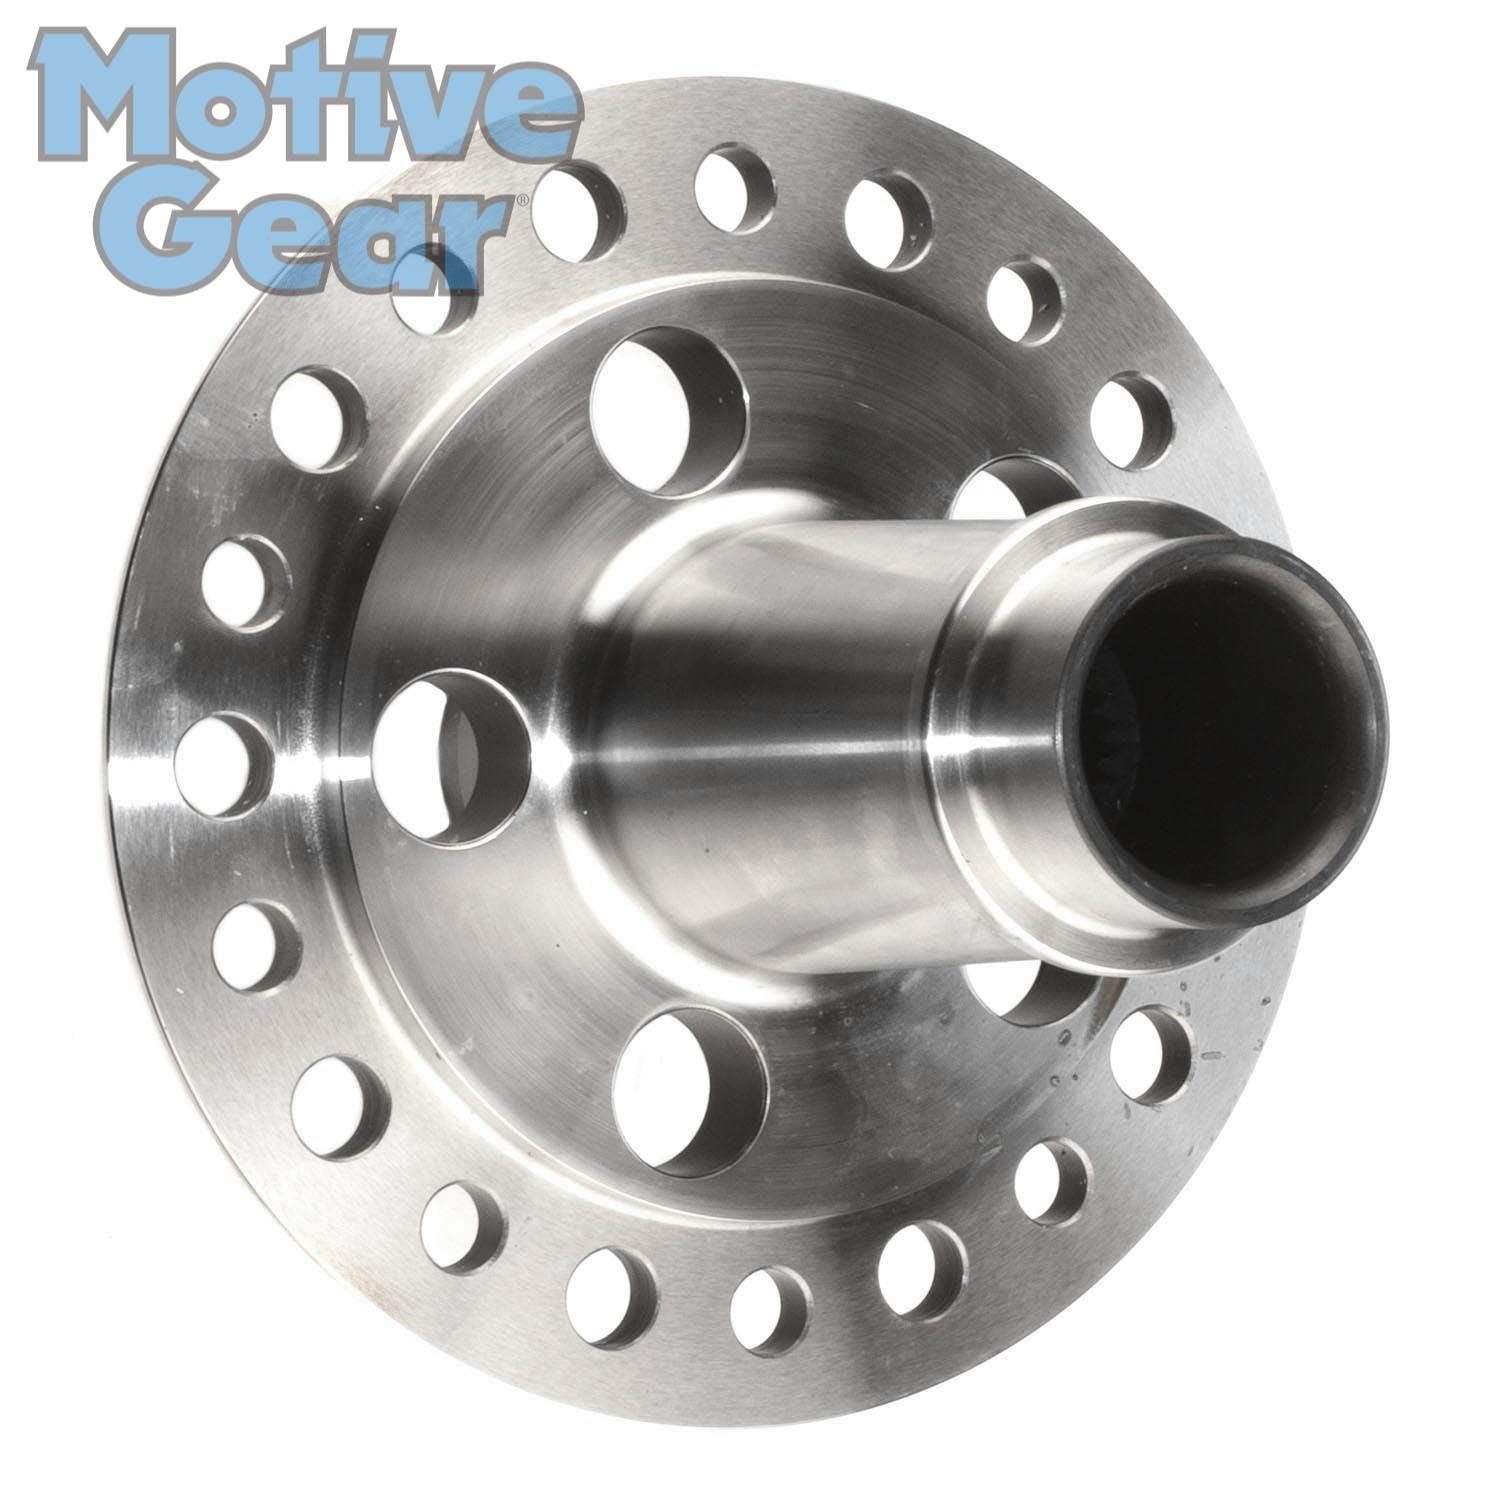 Motive Gear FS9-28 Differential Spool